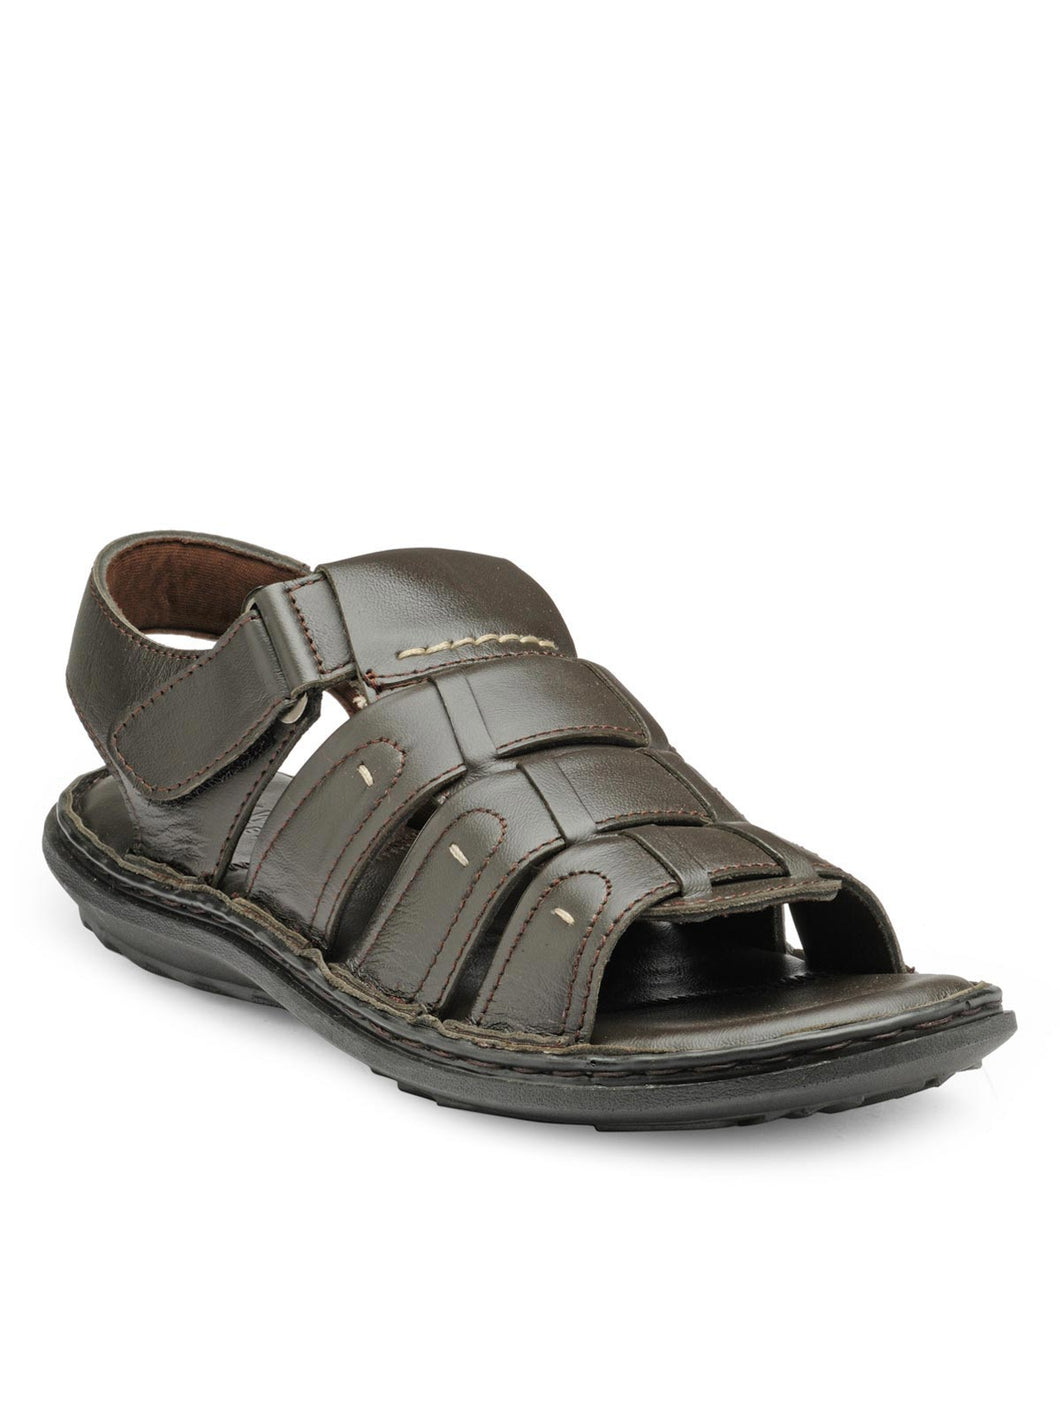 Teakwood Men's Leather Outdoor Slippers & Sandals Footwear